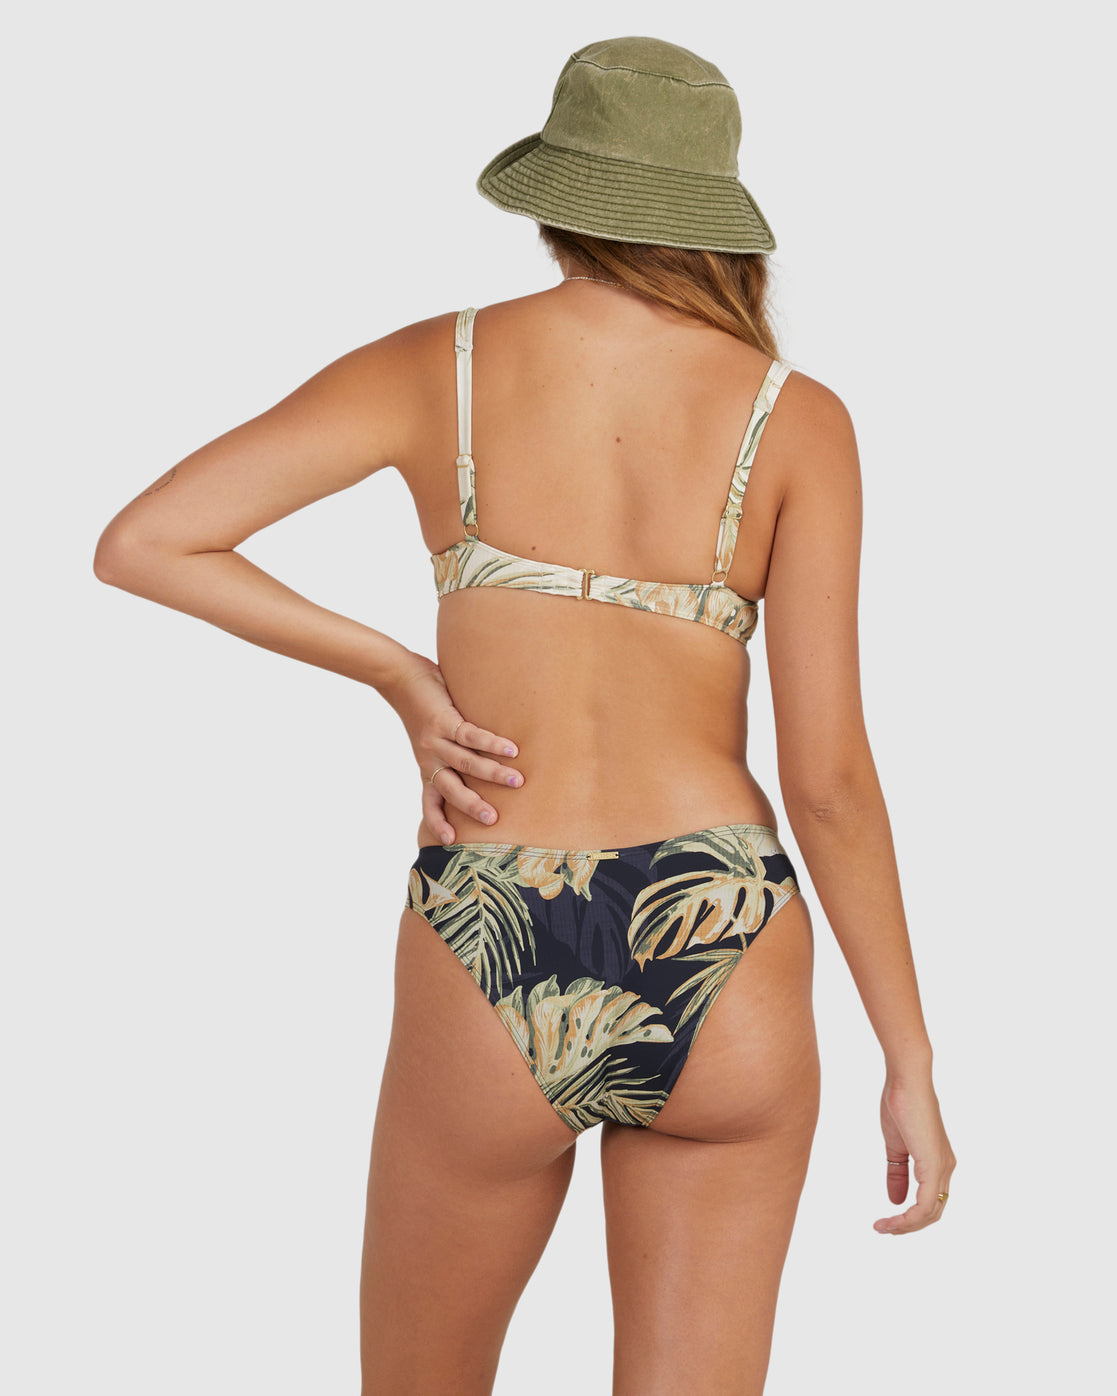 Womens Summer High Chloe Bralette Bikini Top by BILLABONG